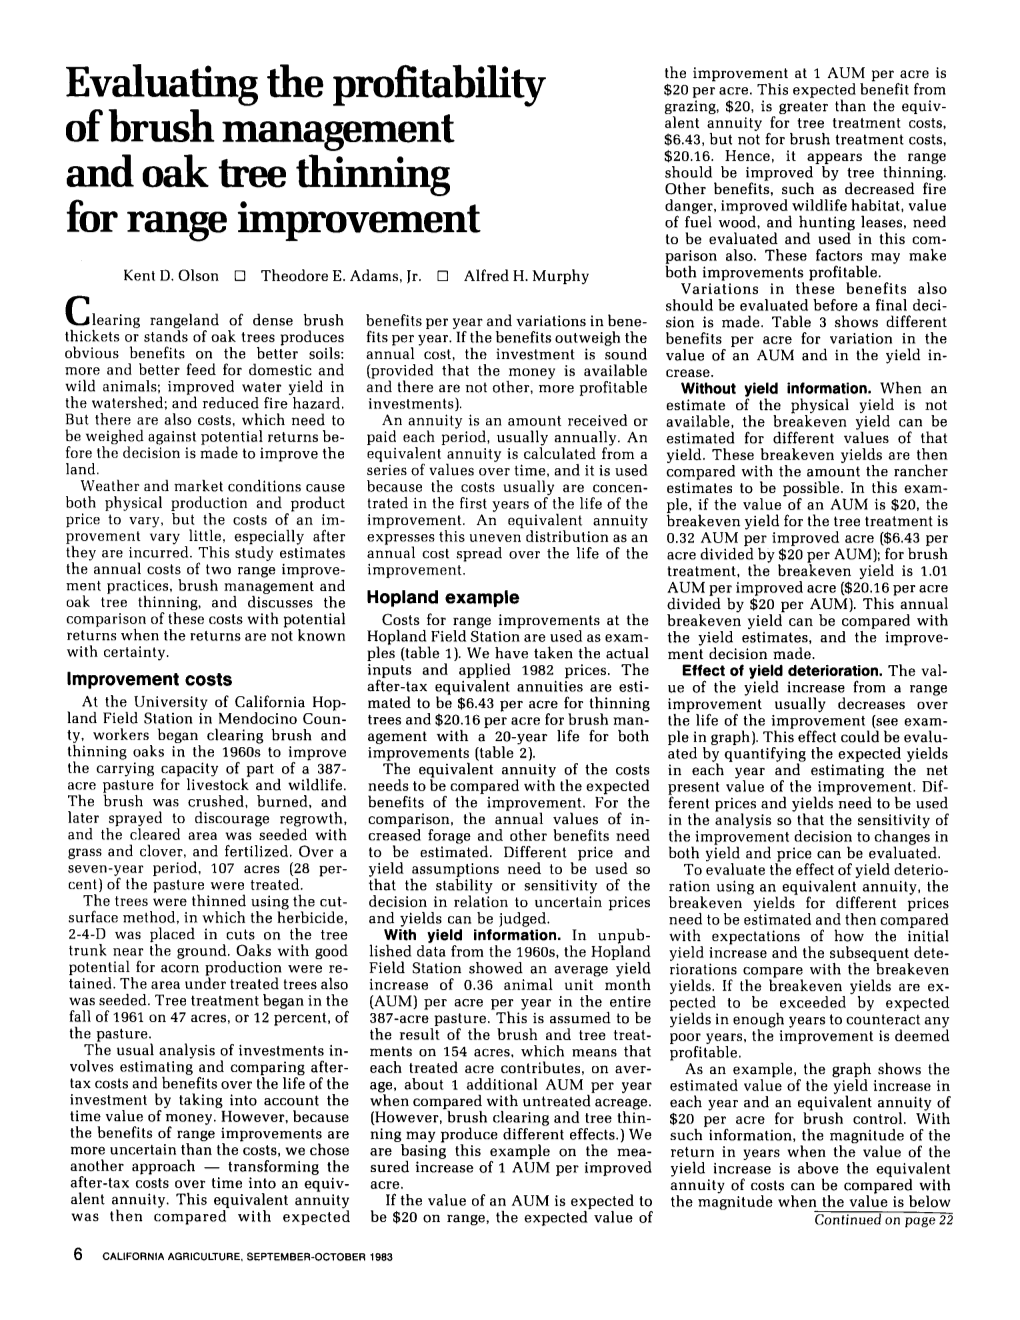 Evaluating the Profitability of Brush Management and Oak Tree Thinning for Range Improvement